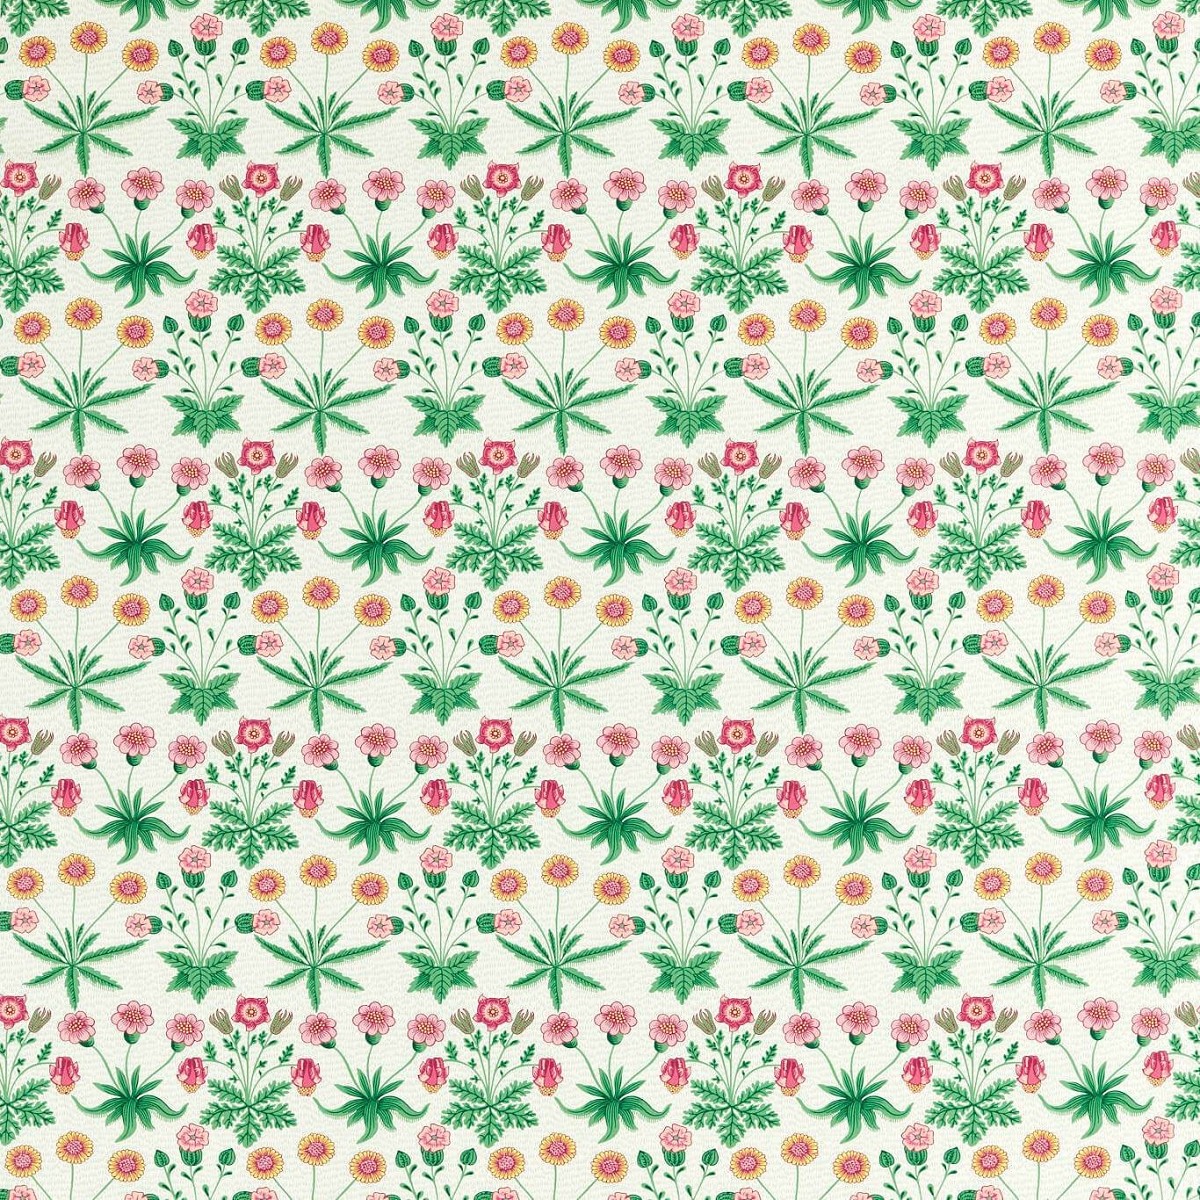 Daisy Strawberry Fields Fabric by William Morris & Co.